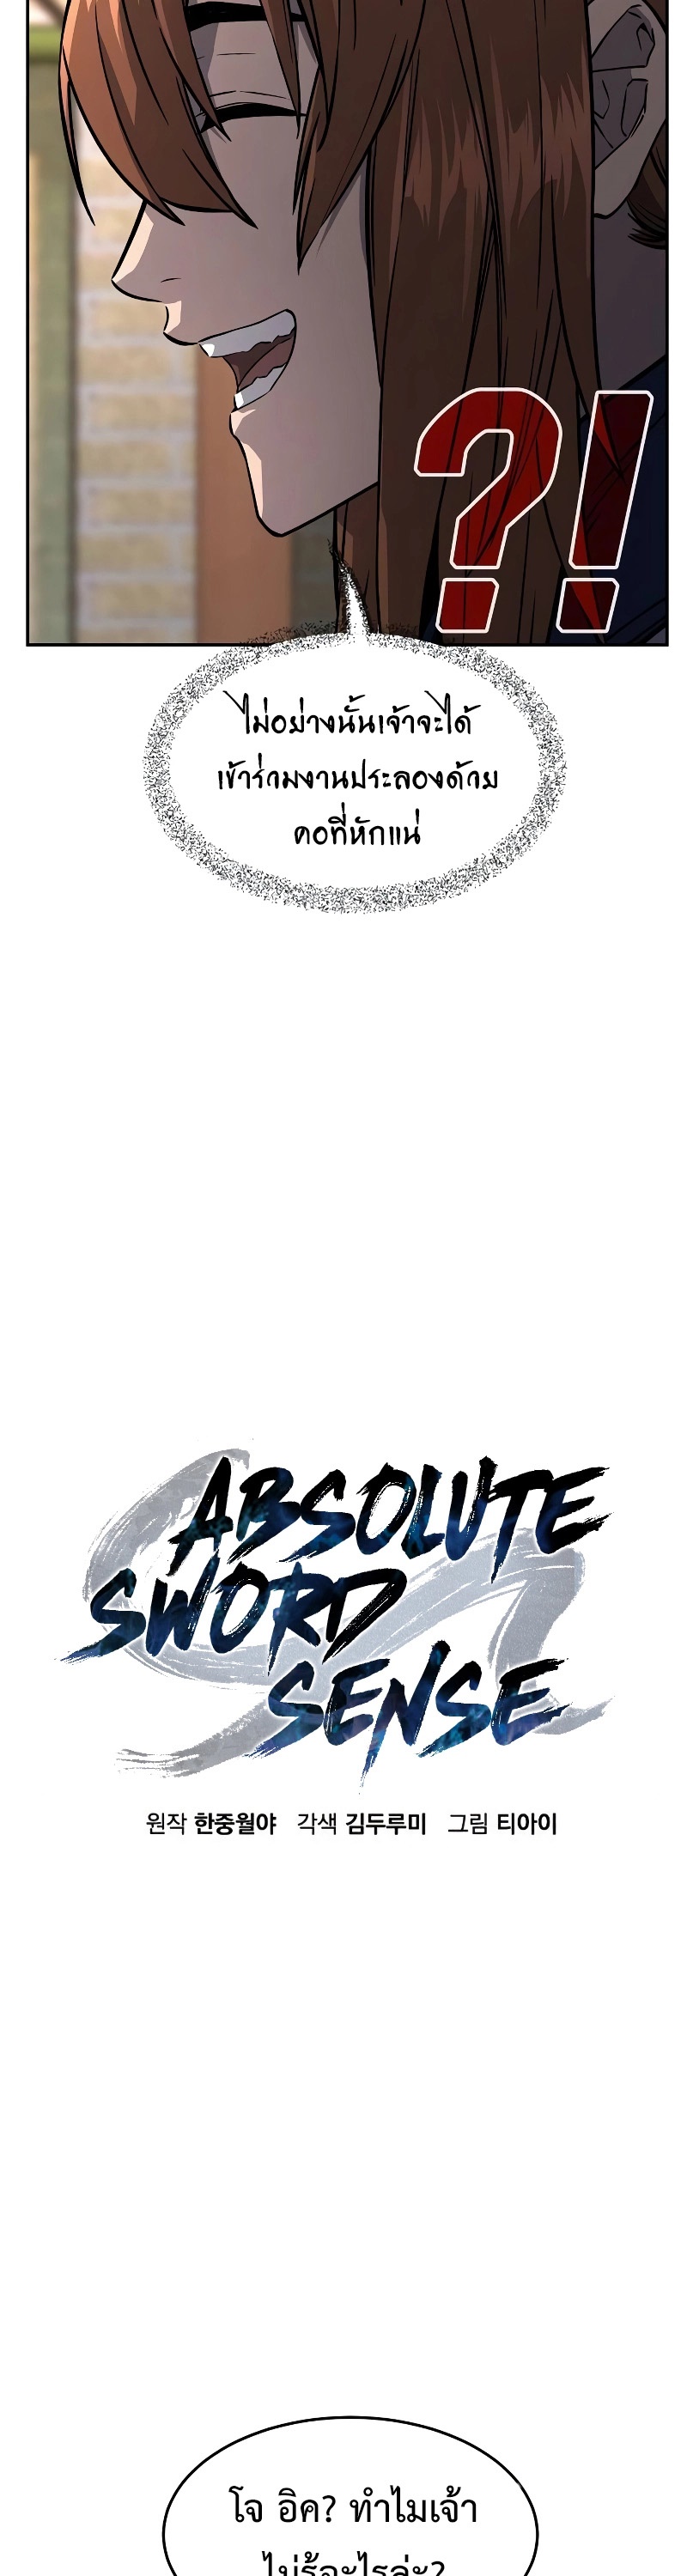 Absolute Sword Sense 73 (17)